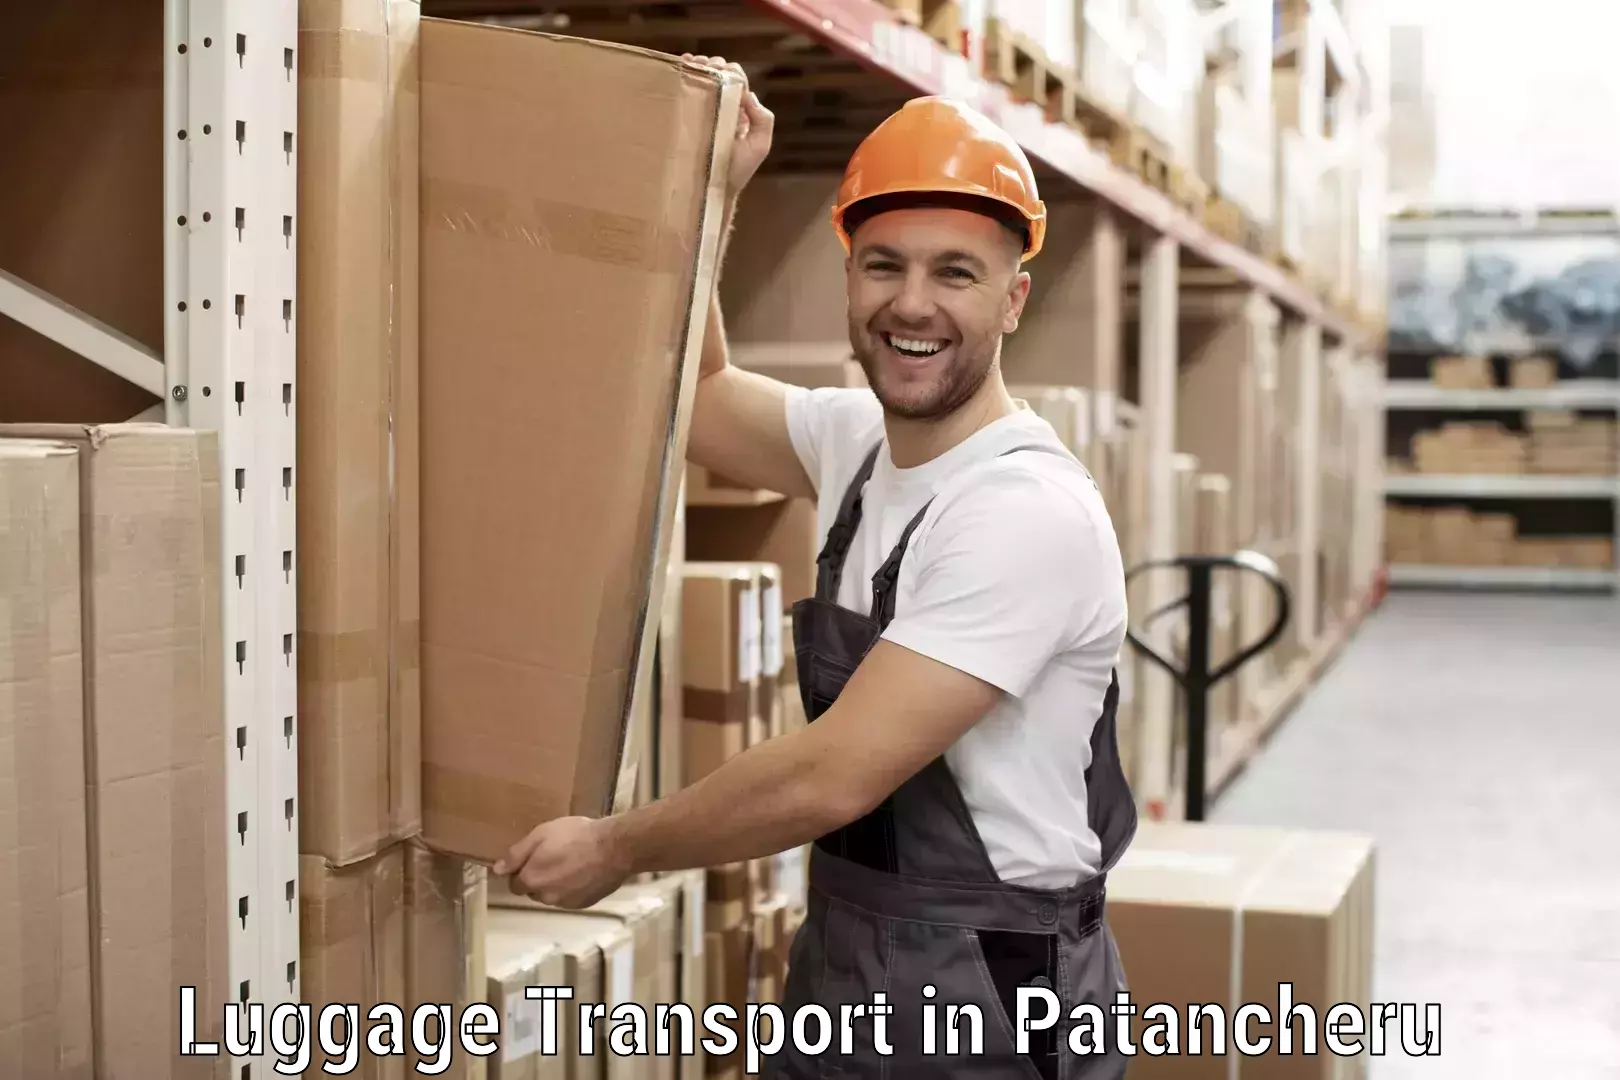 Luggage transport company in Patancheru